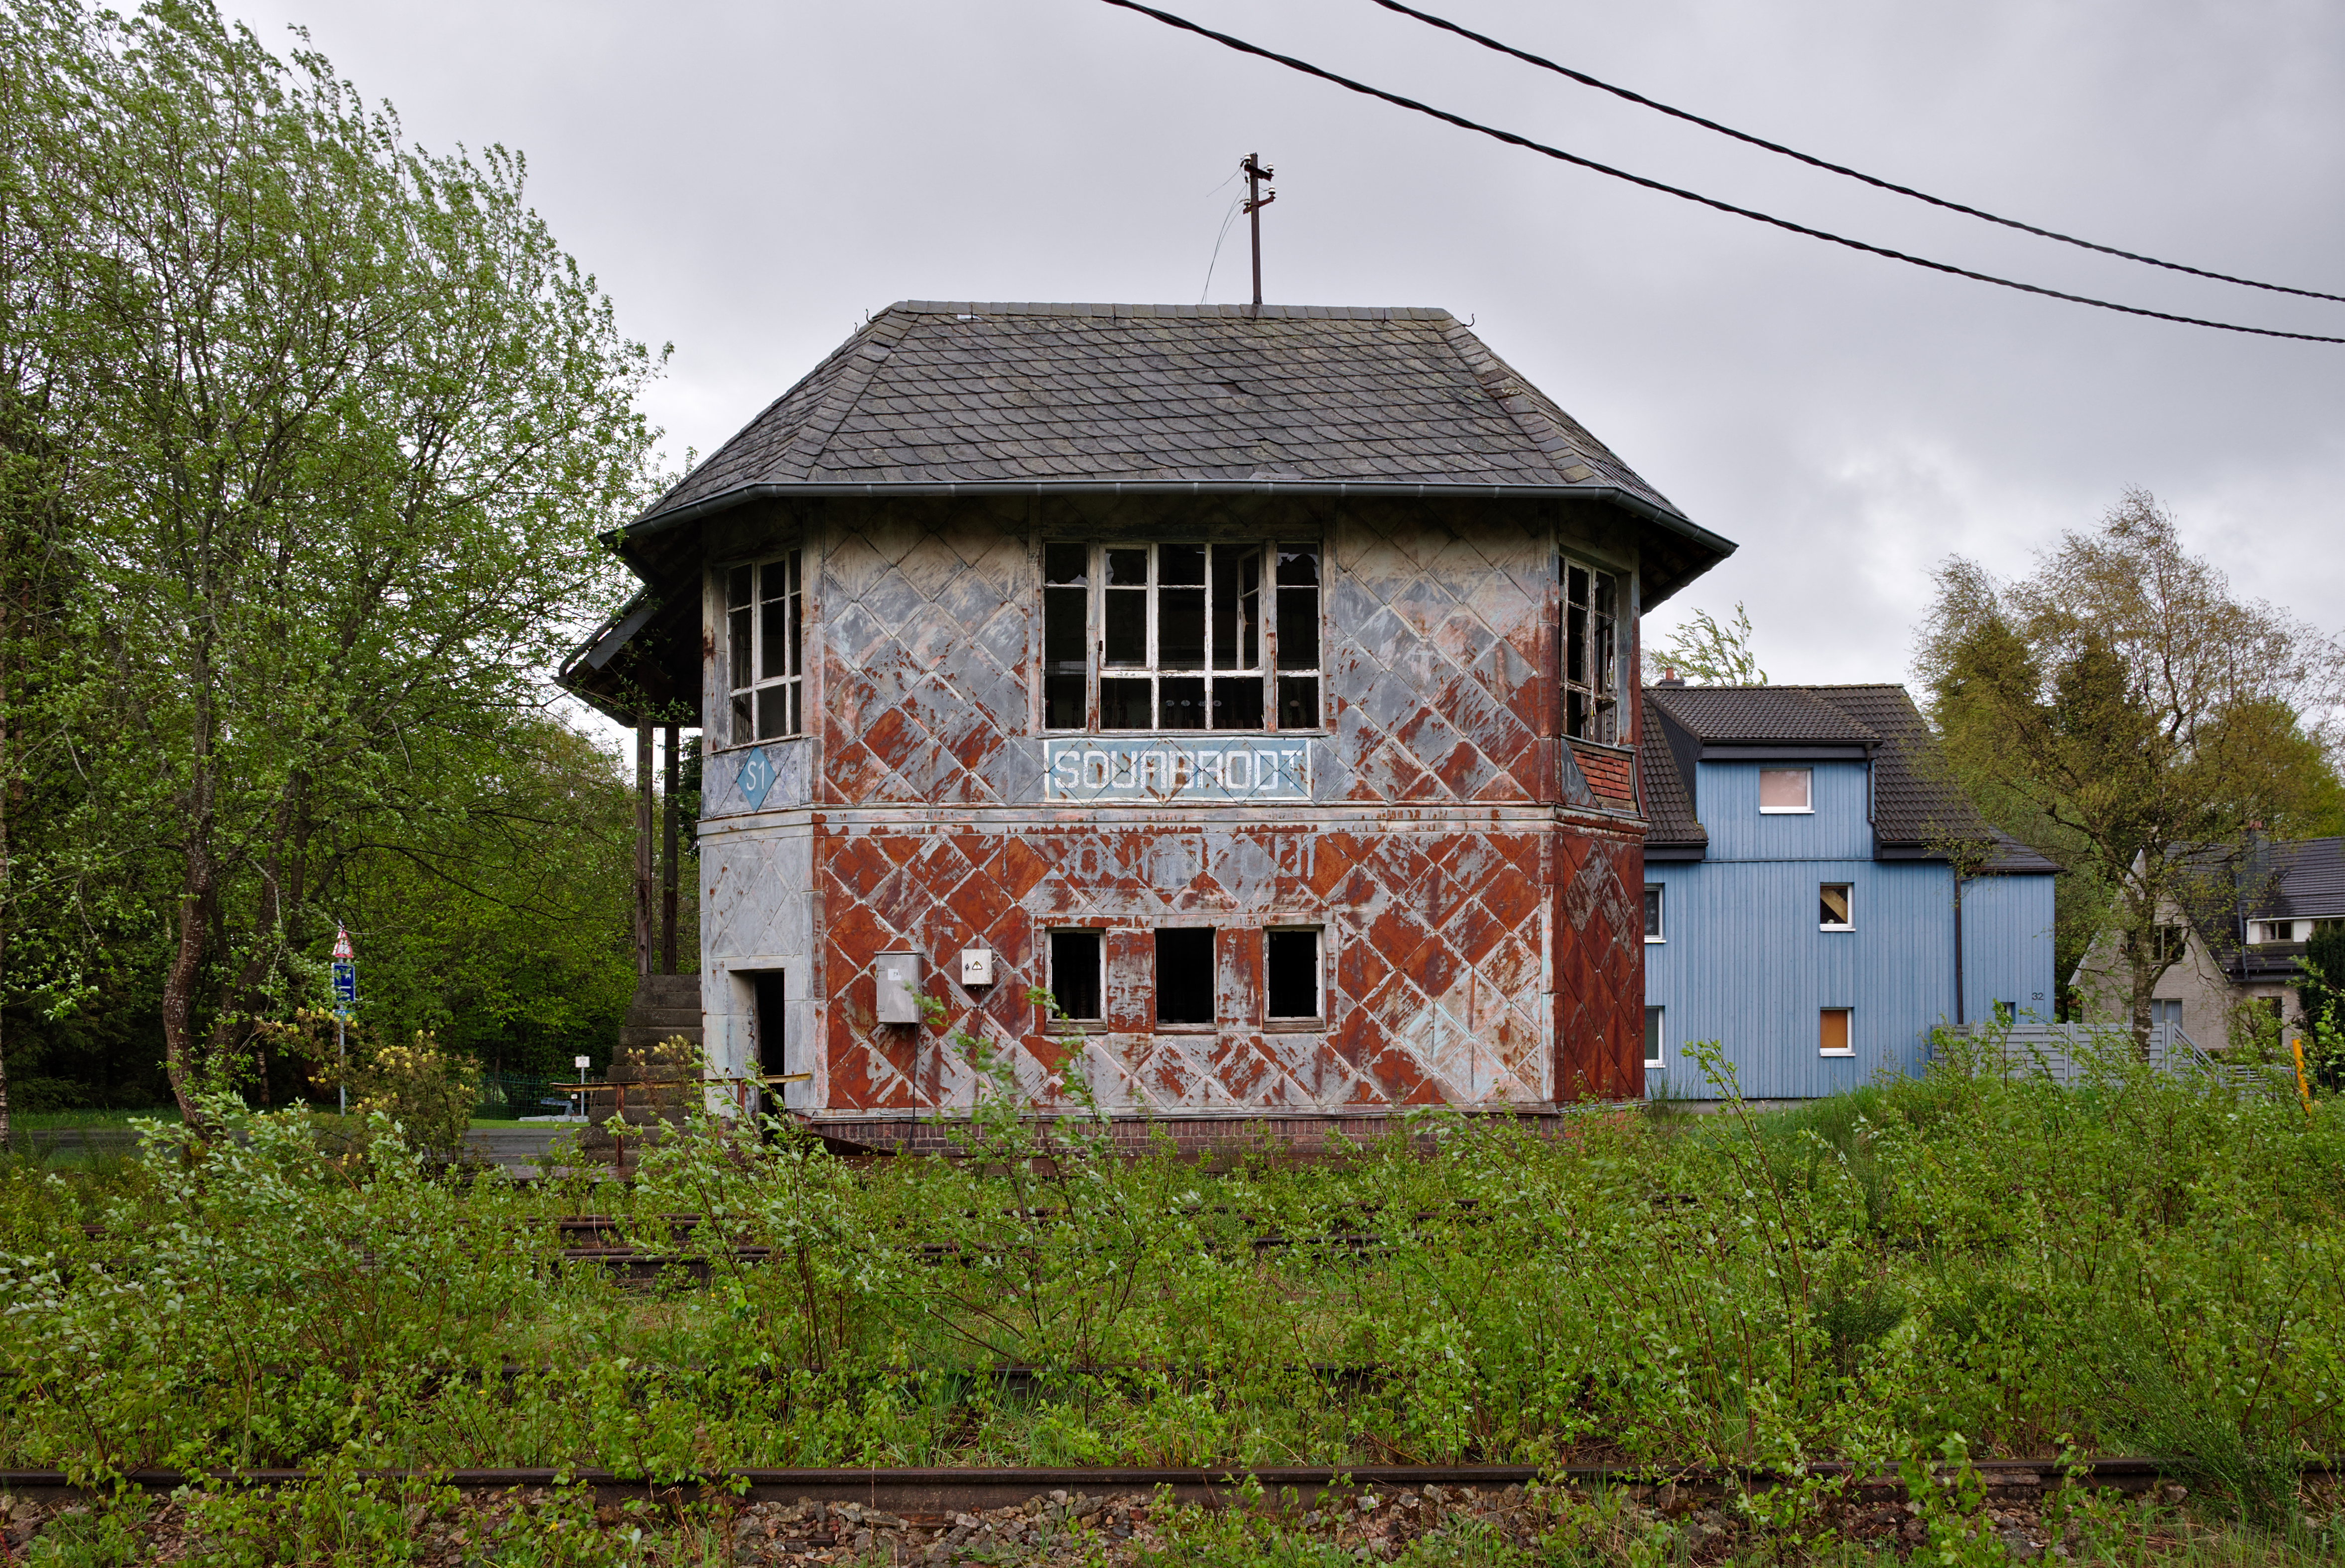 Sourbrodt train station signal box (DSCF5821) Waimes, Belgium